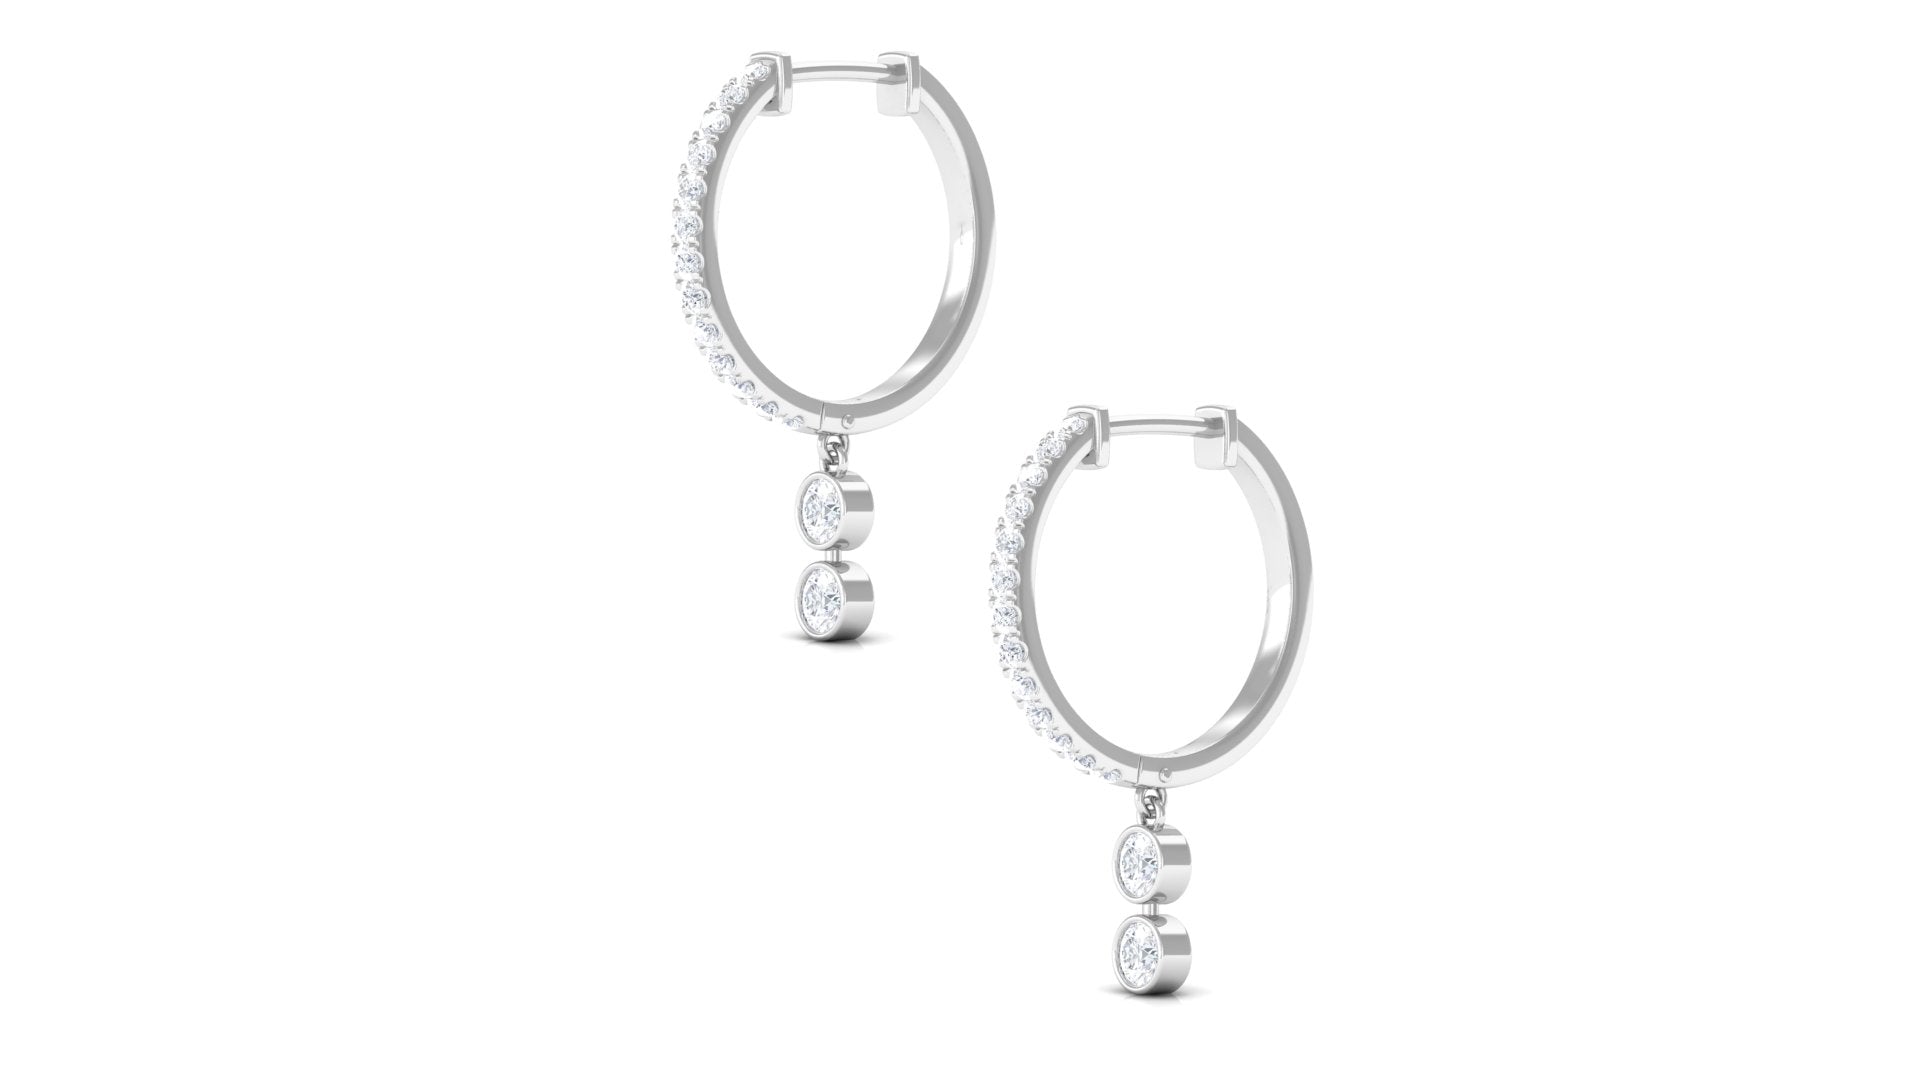 1/2 CT Minimal Diamond Gold Hoop Drop Earrings in Bezel Setting Diamond - ( HI-SI ) - Color and Clarity - Rosec Jewels